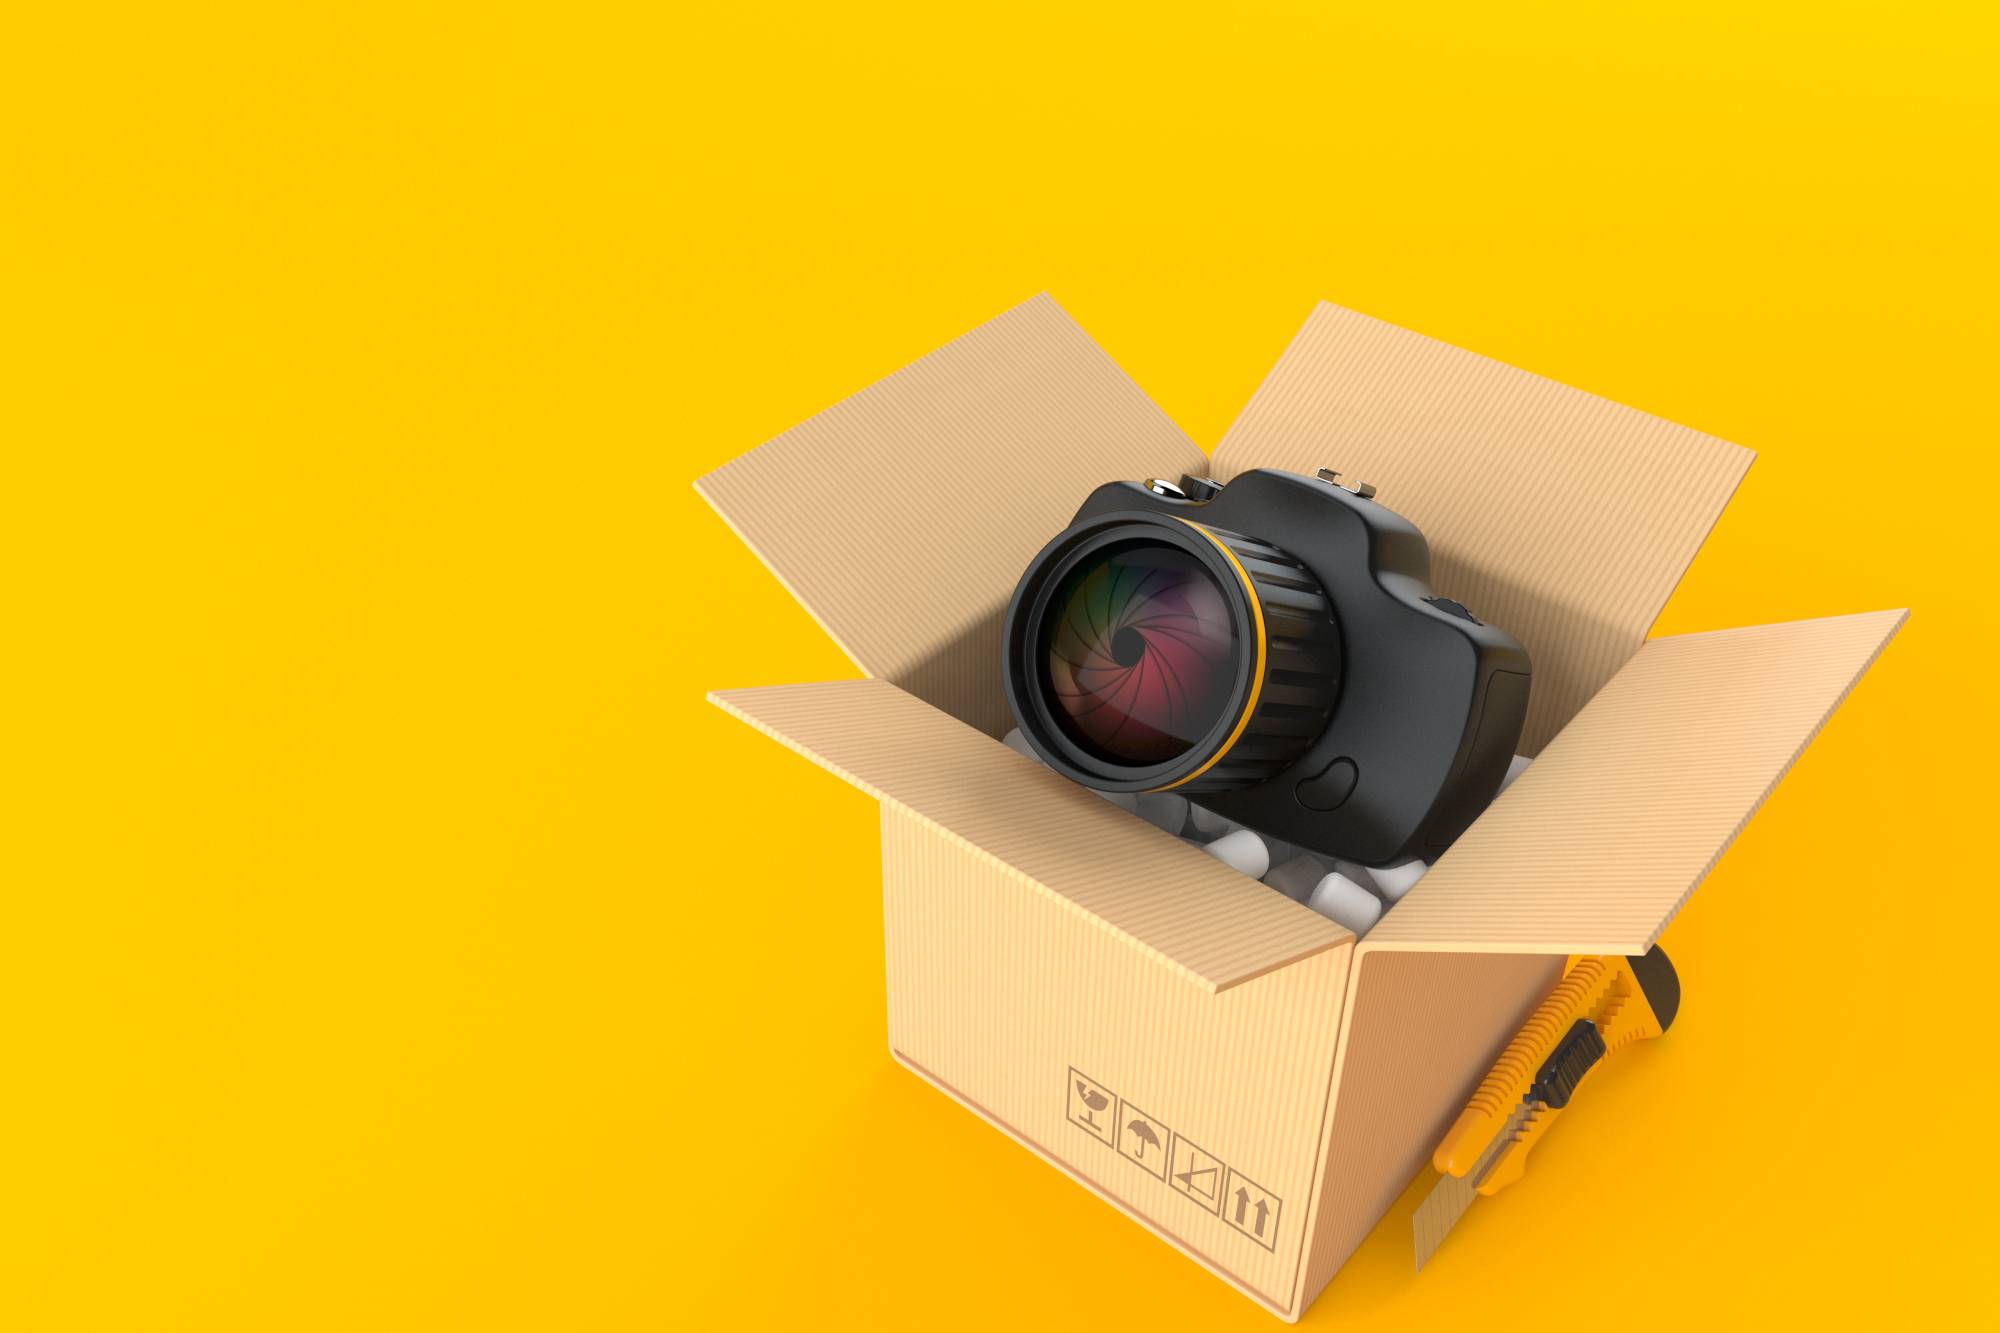 Digital camera delivered in a cardboard box